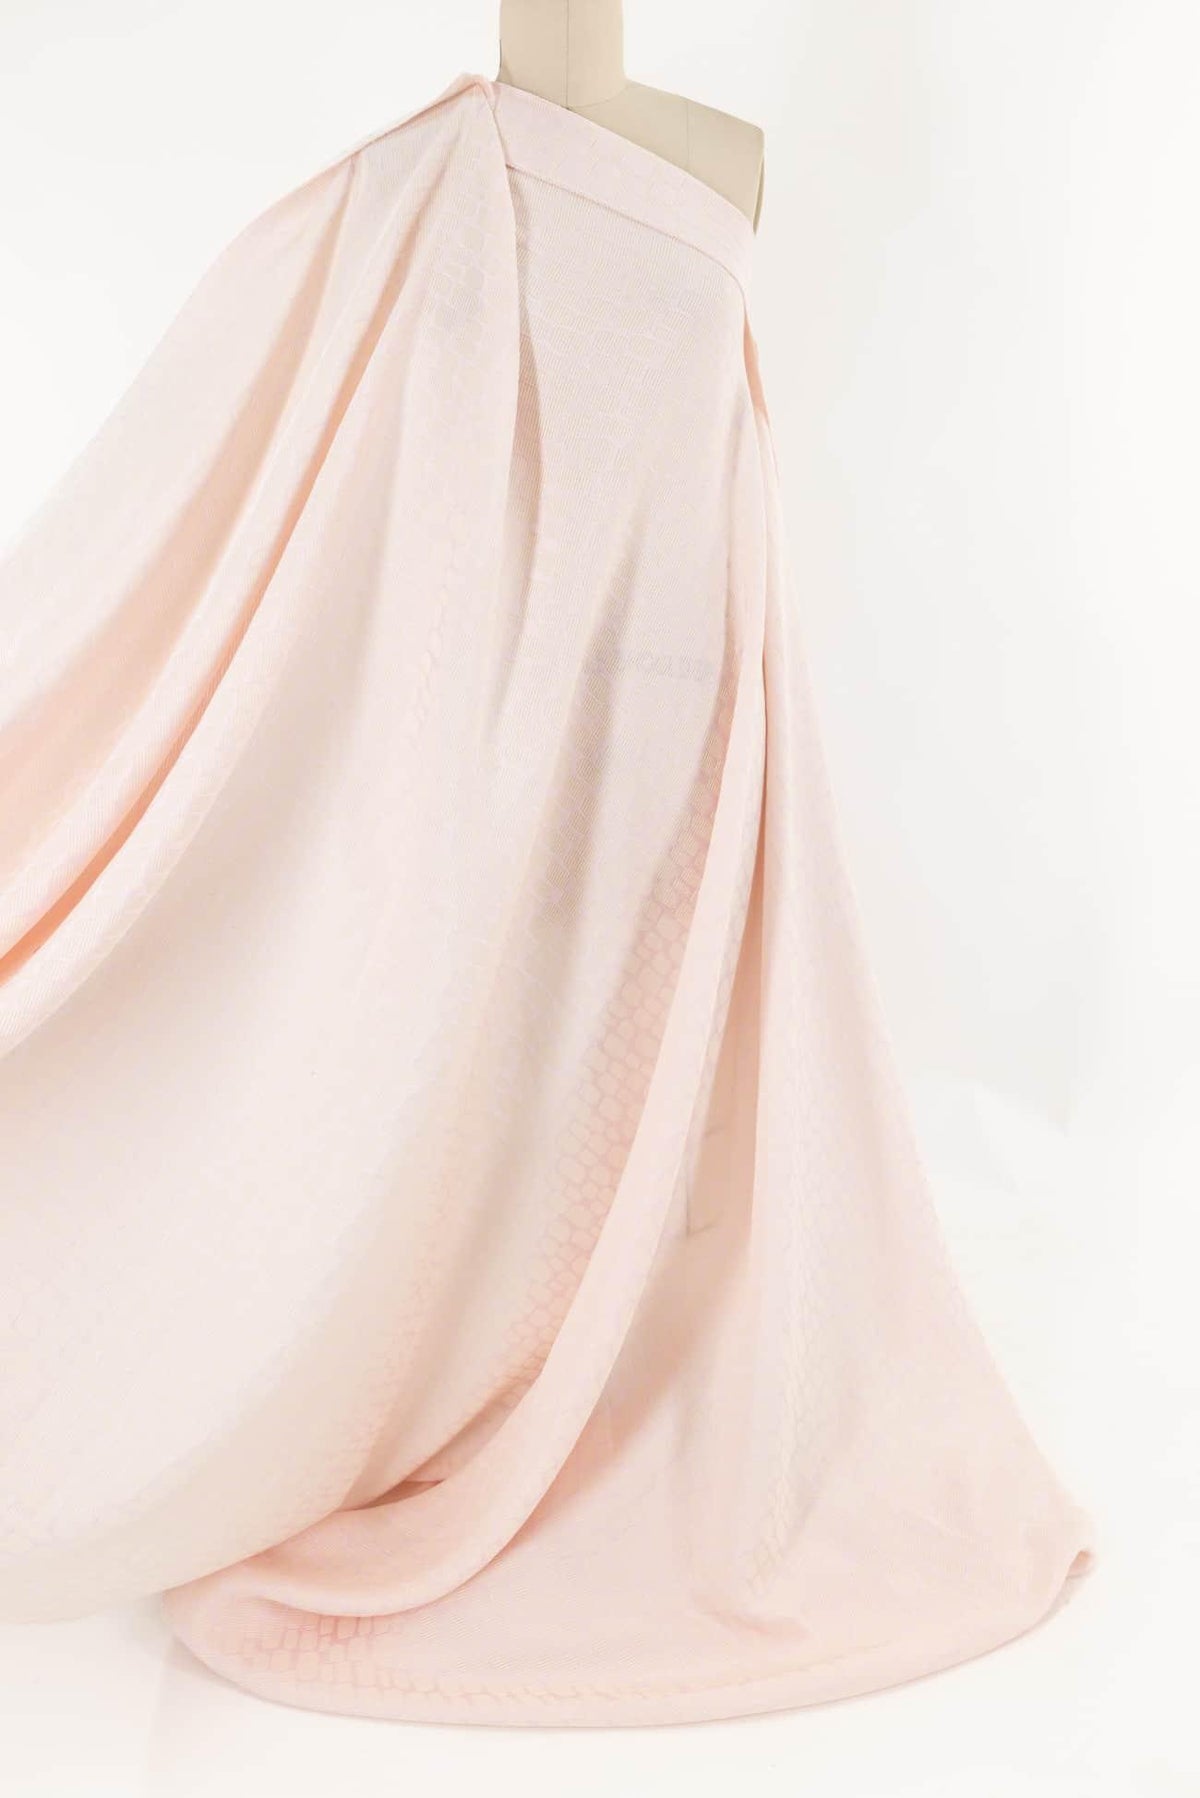 Powder Puff Pink French Jacquard Woven - Marcy Tilton Fabrics